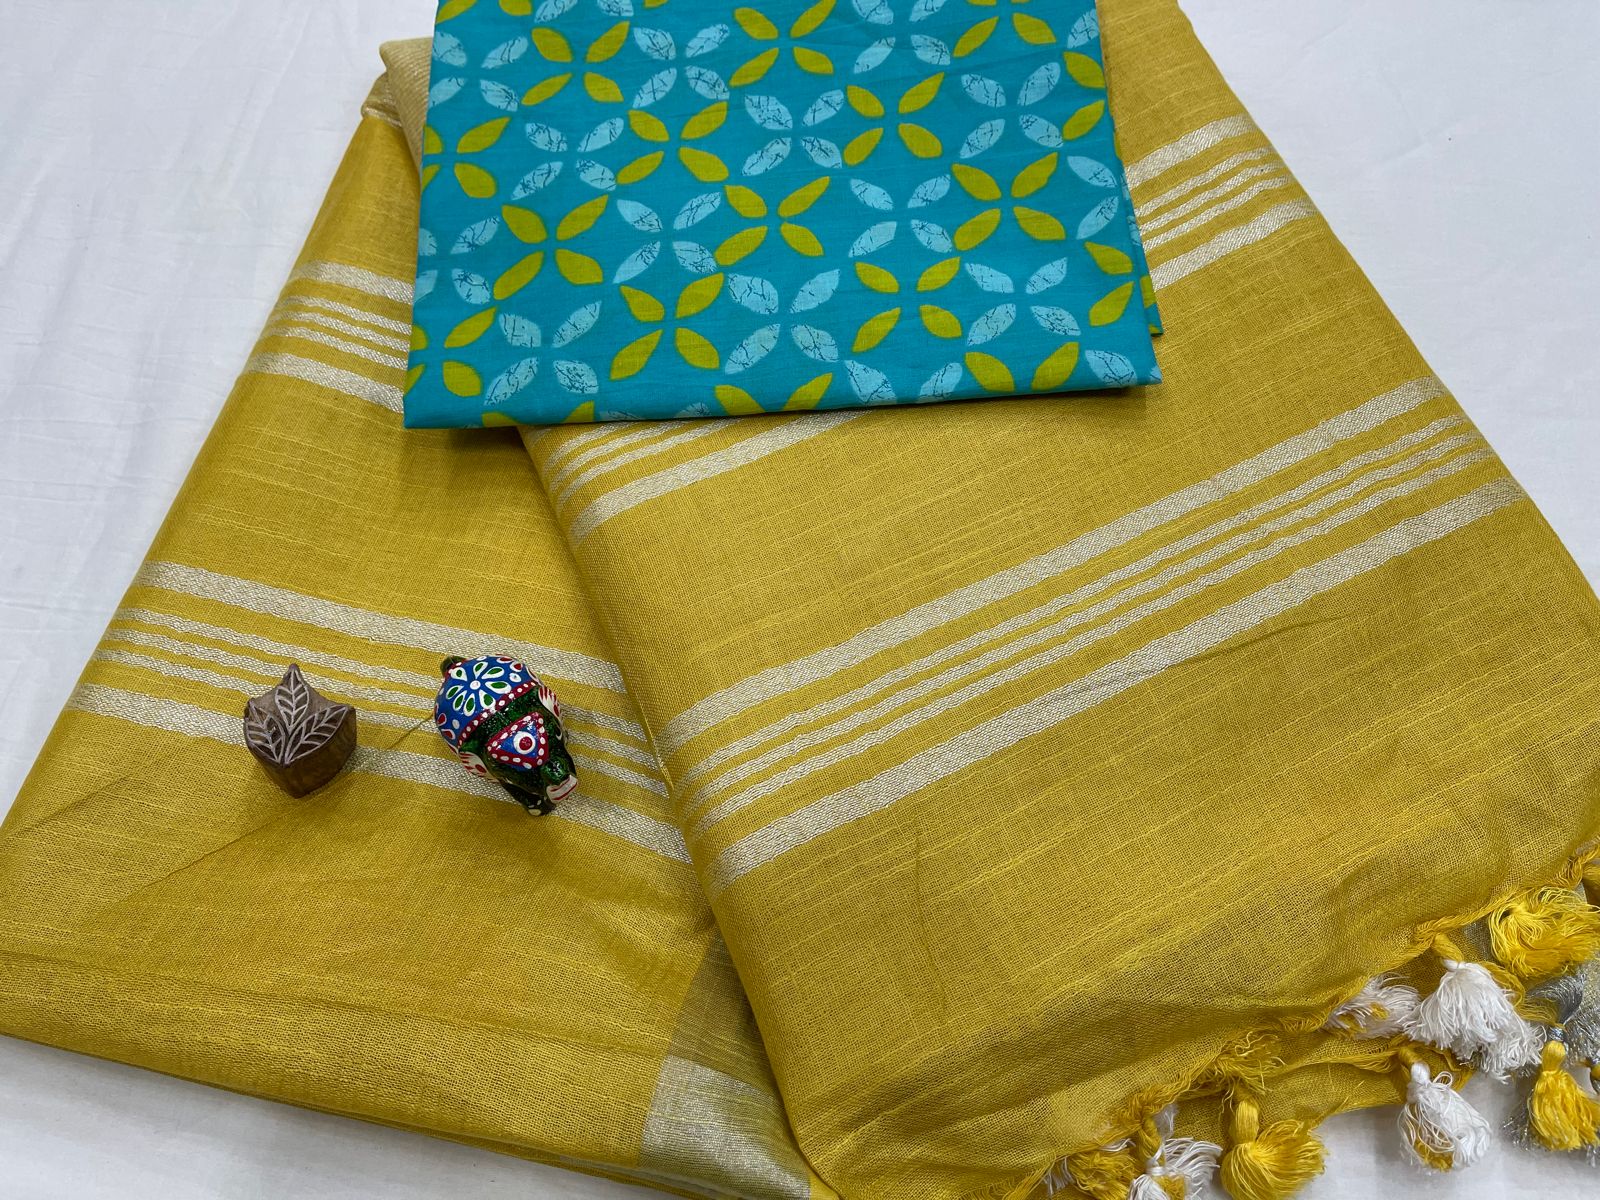 Plain Amber yellow cotton linen sarees